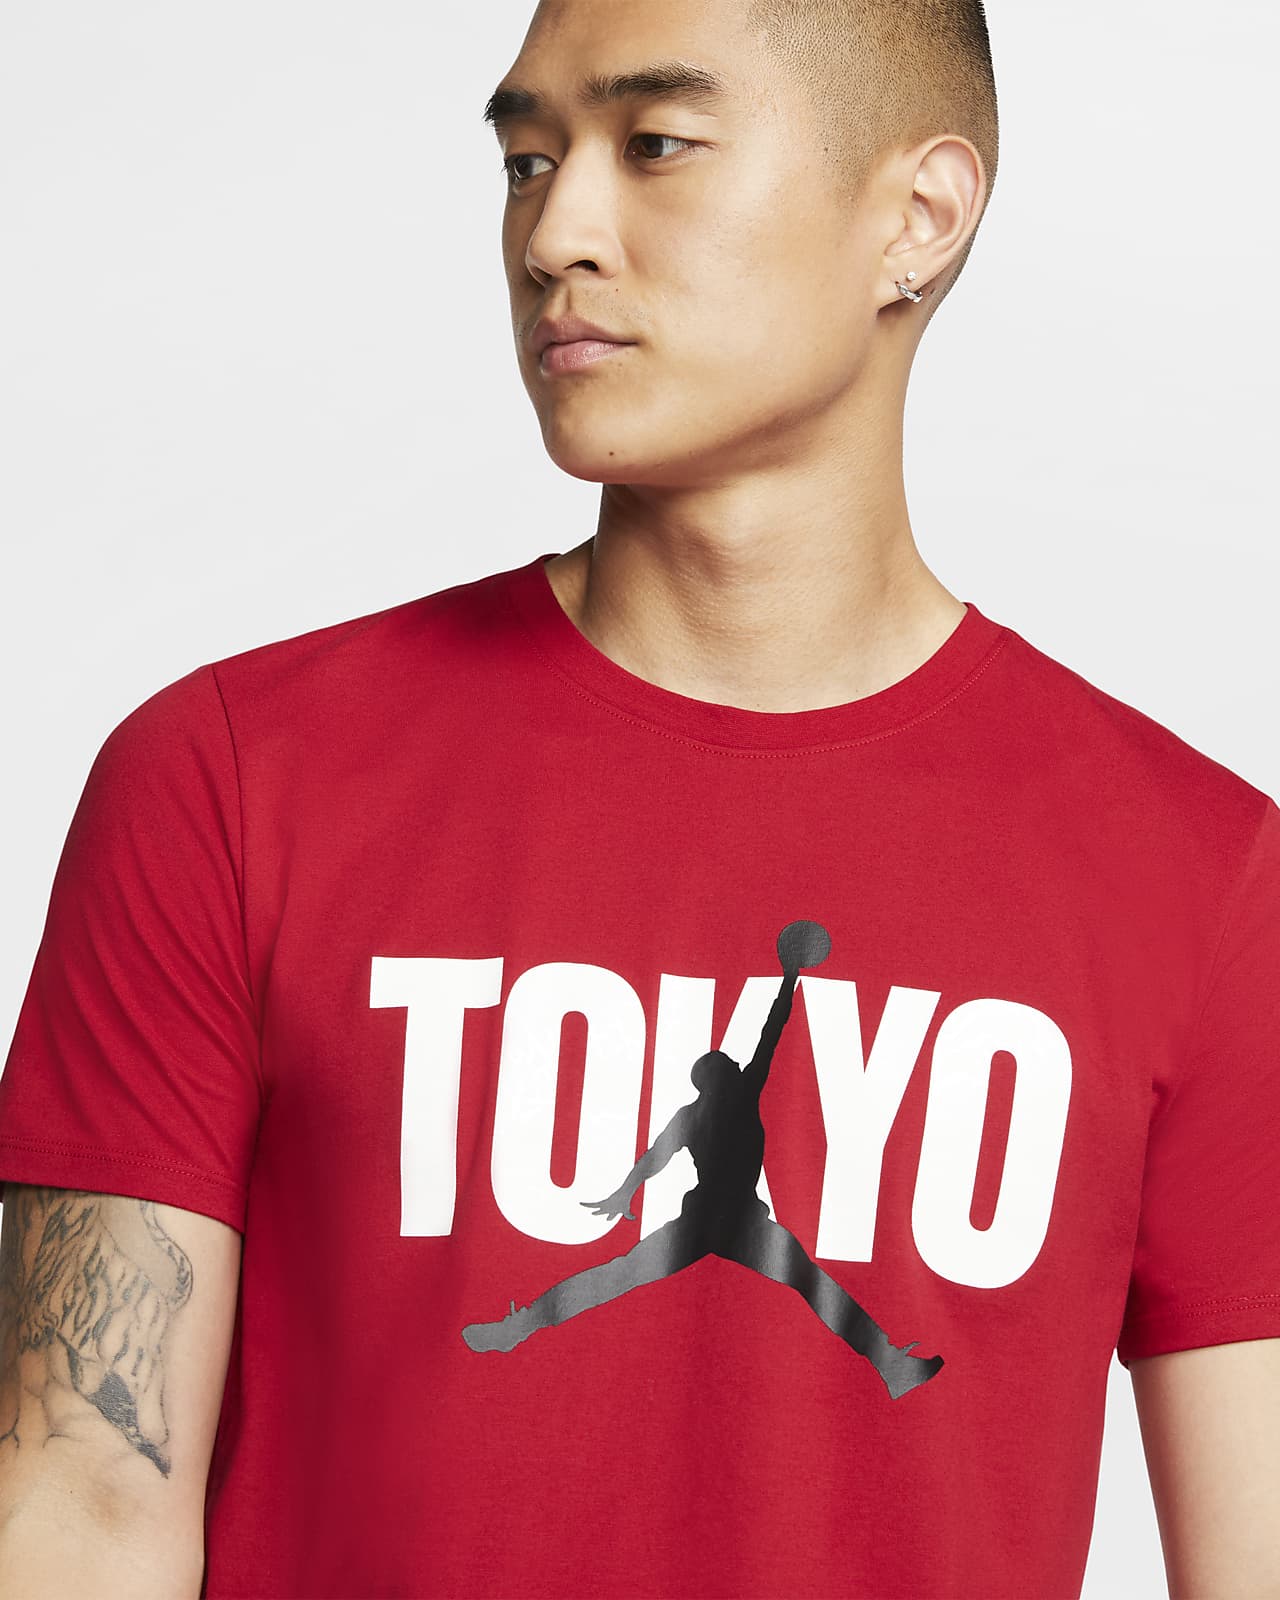 Nike公式 ジョーダン バック イン Tokyo メンズ Tシャツ オンラインストア 通販サイト